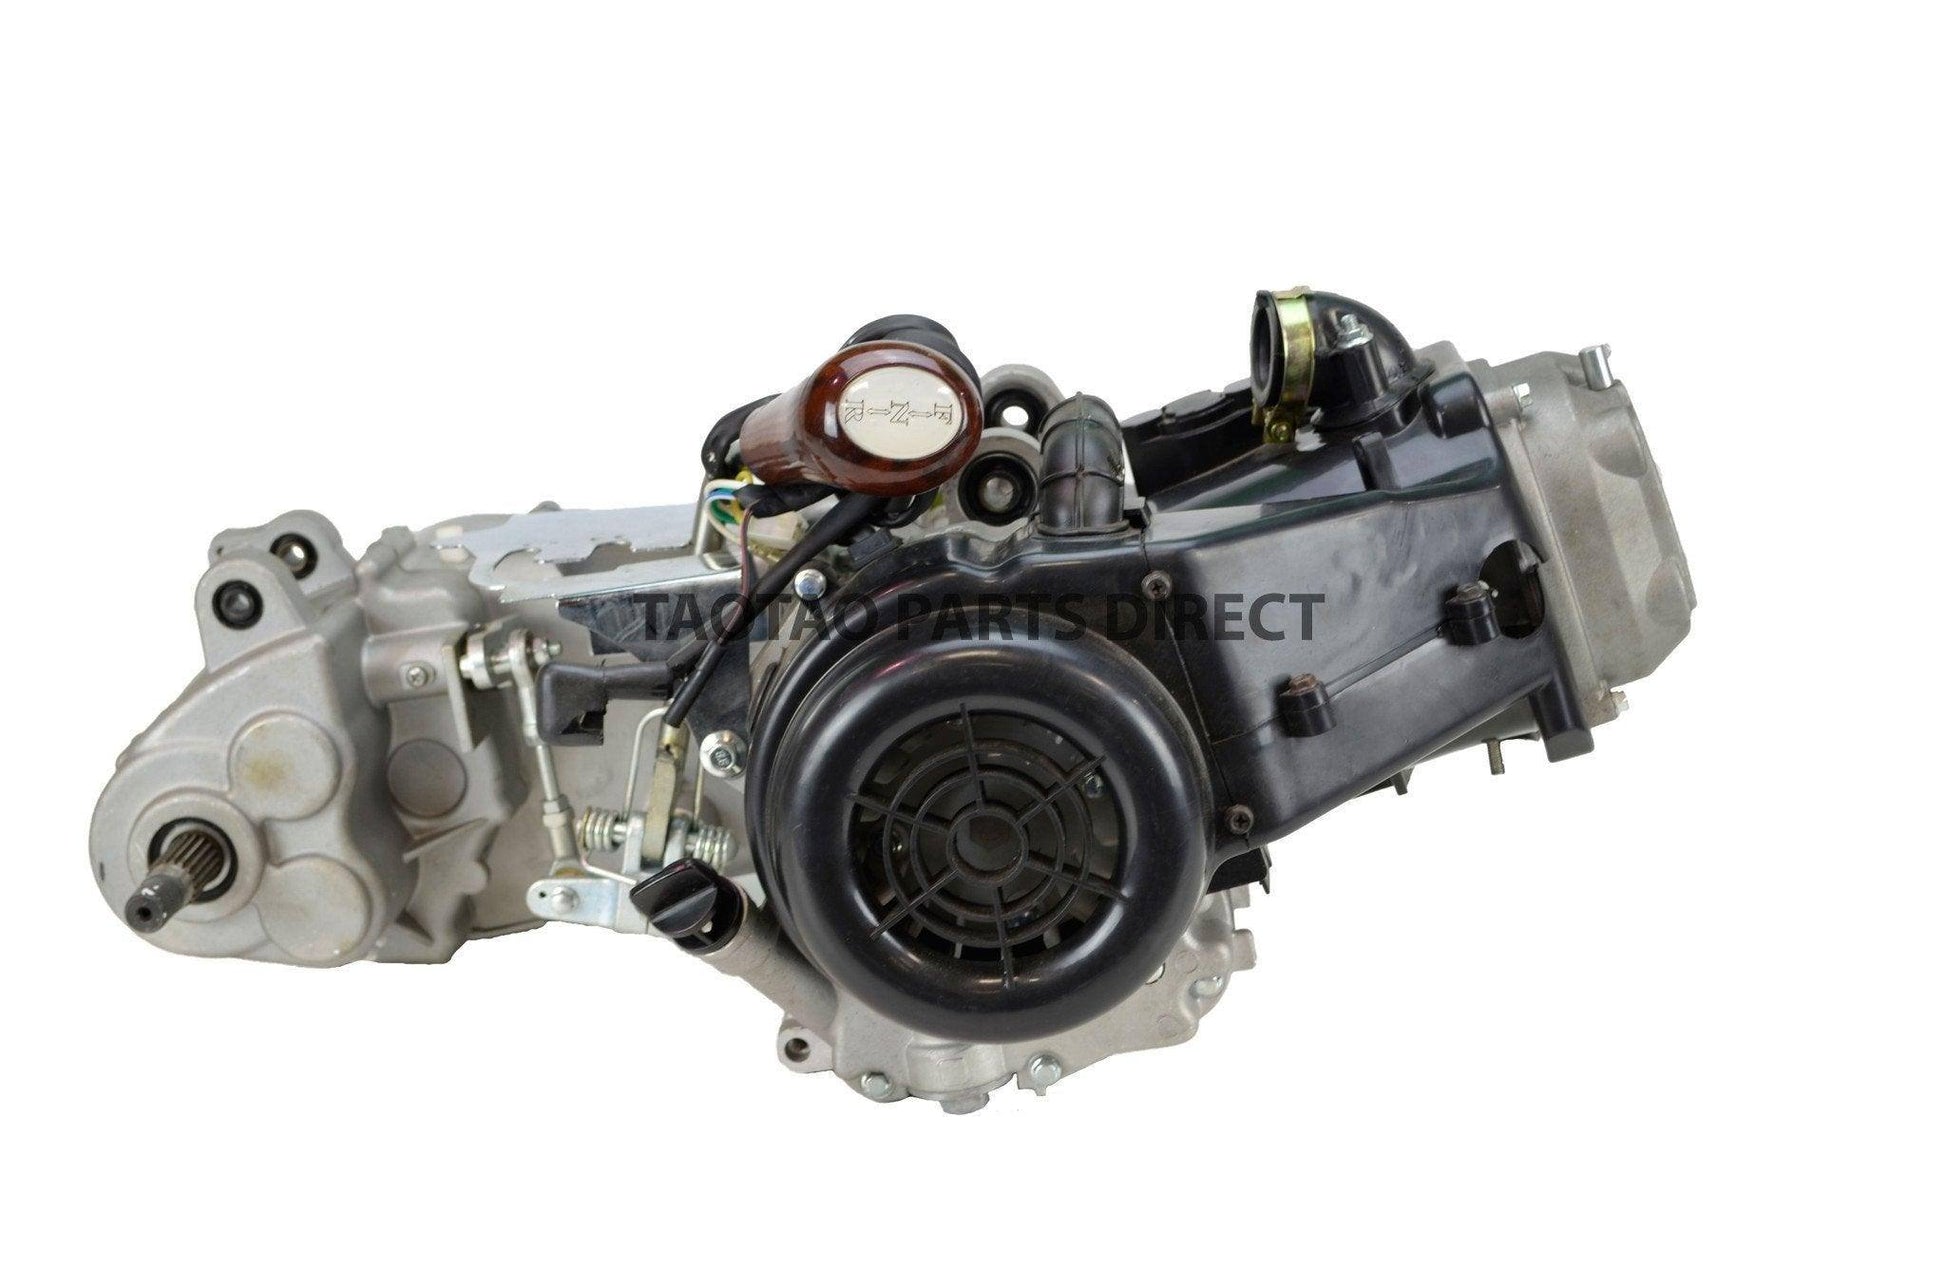 150cc GY6 ATV Engine - TaoTao Parts Direct